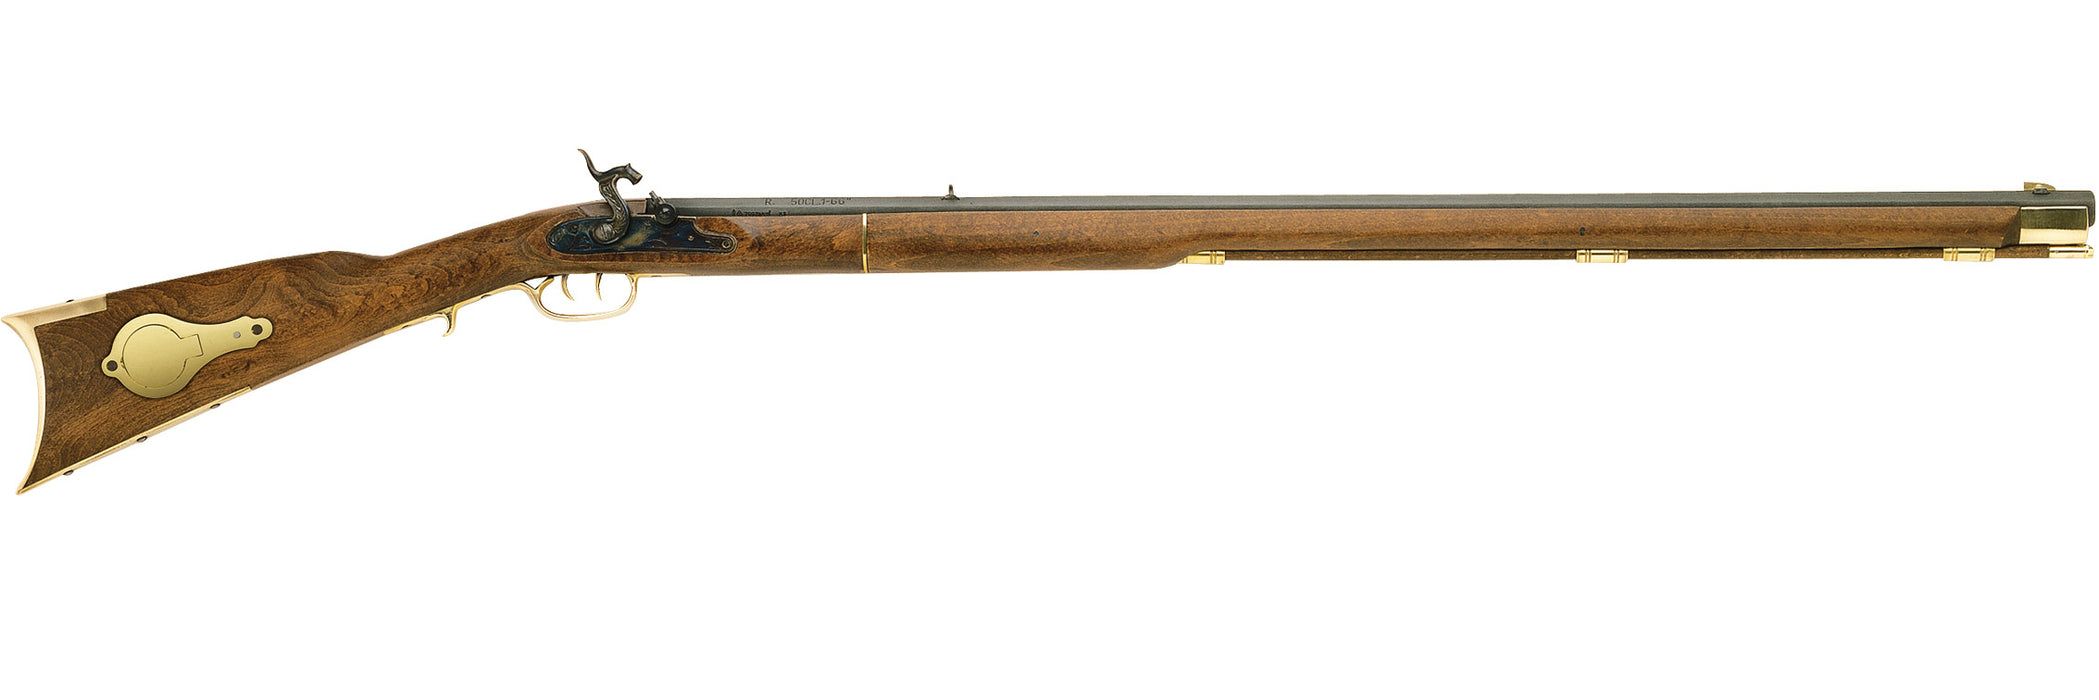 Miniature Kentucky Rifle – Contemporary Longrifle Association